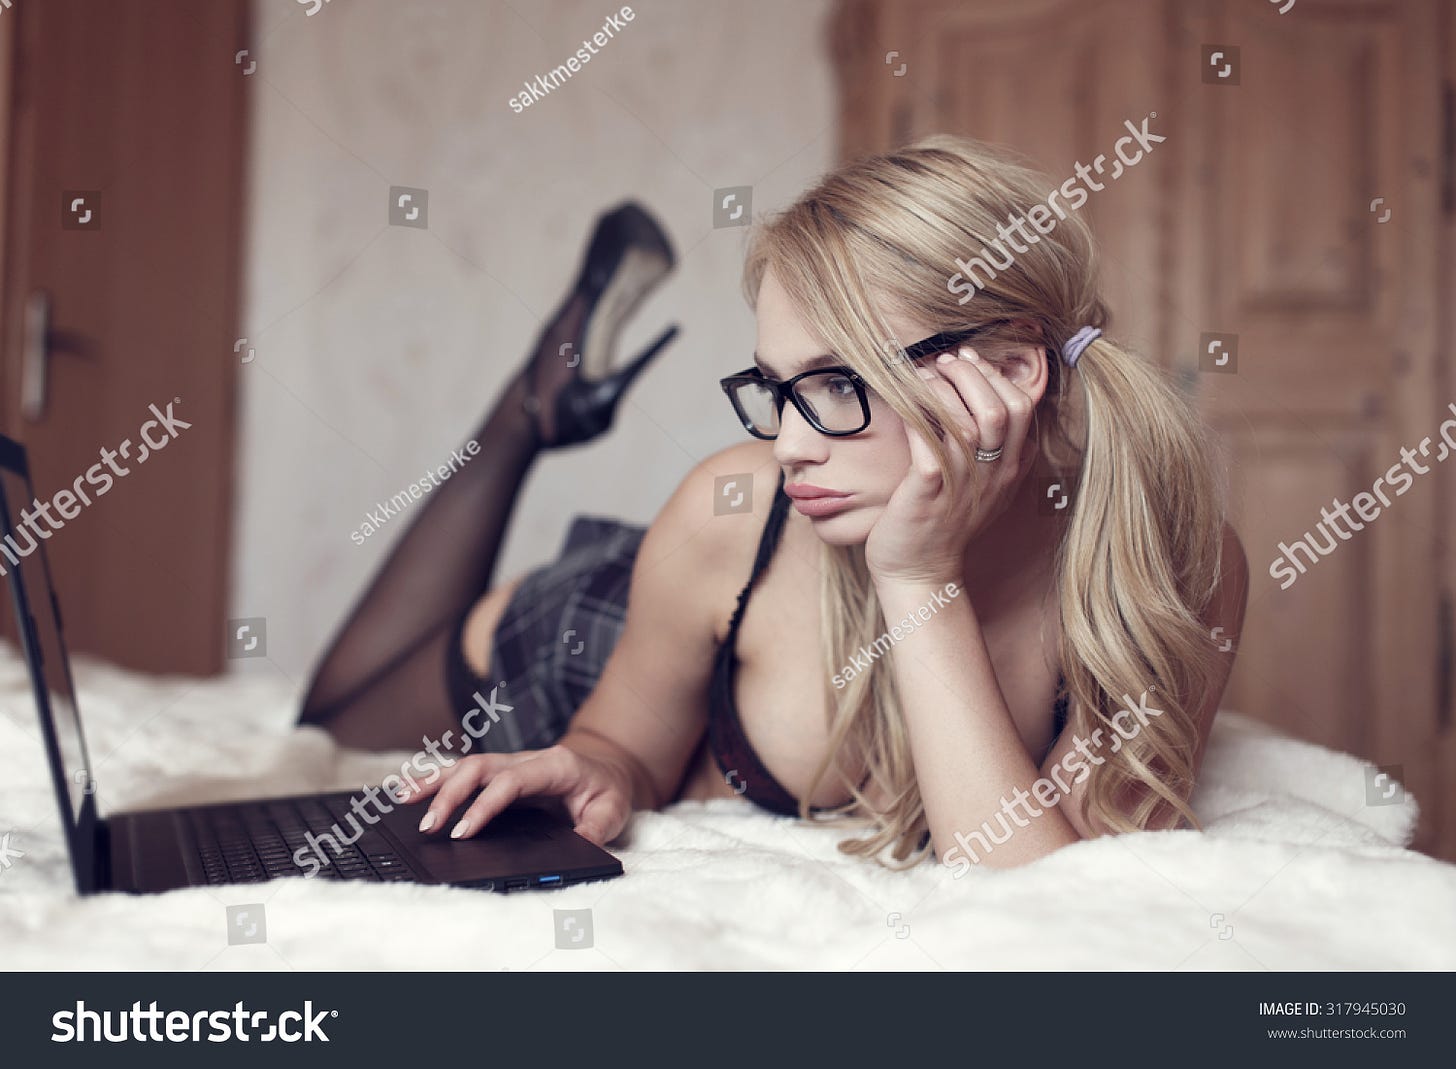 856 Boring Sex Images, Stock Photos & Vectors | Shutterstock